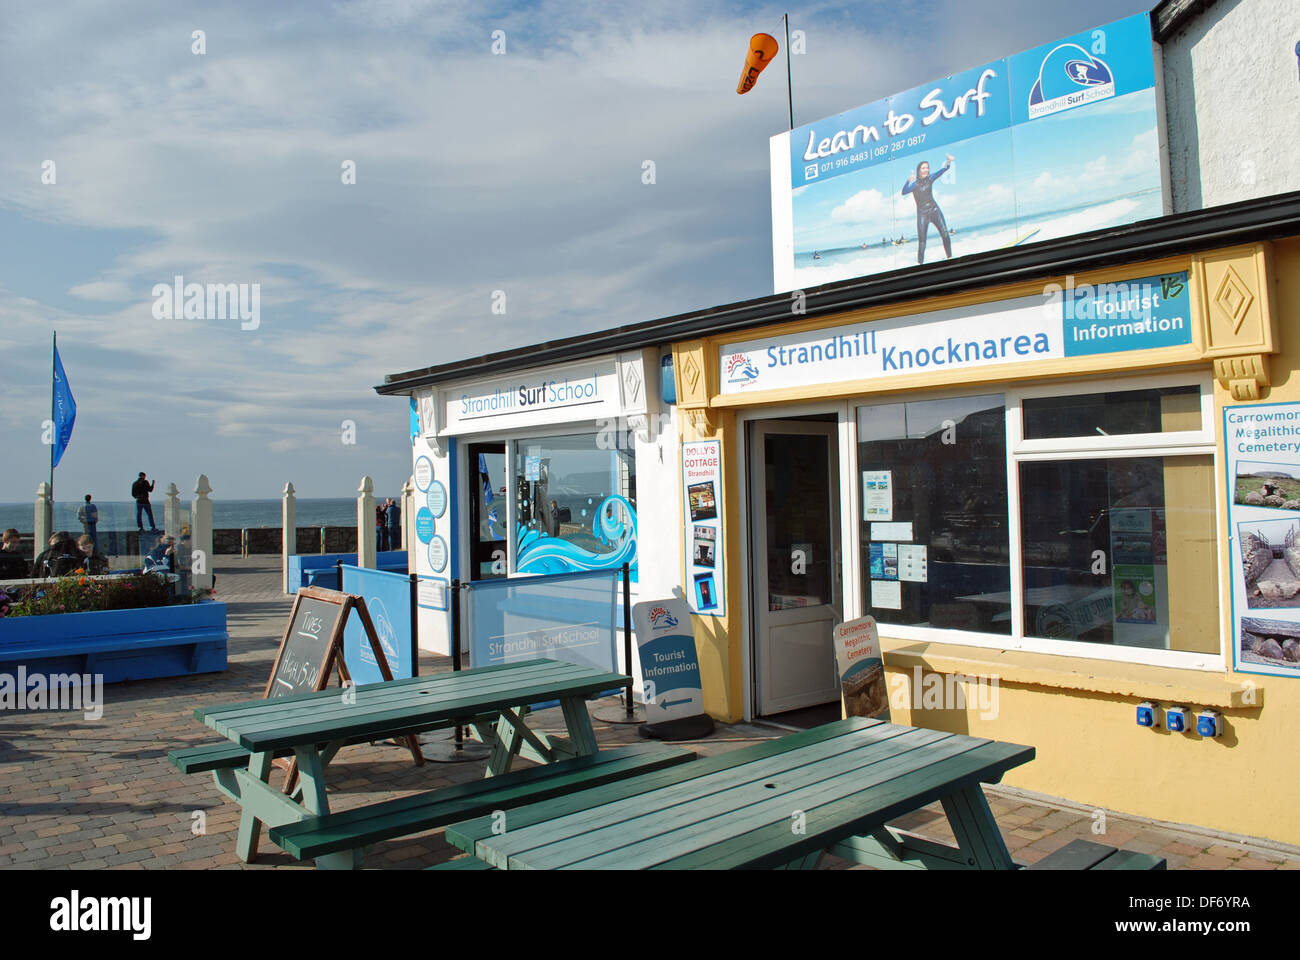 Surf shop in Strandhill, Sligo. Stock Photo